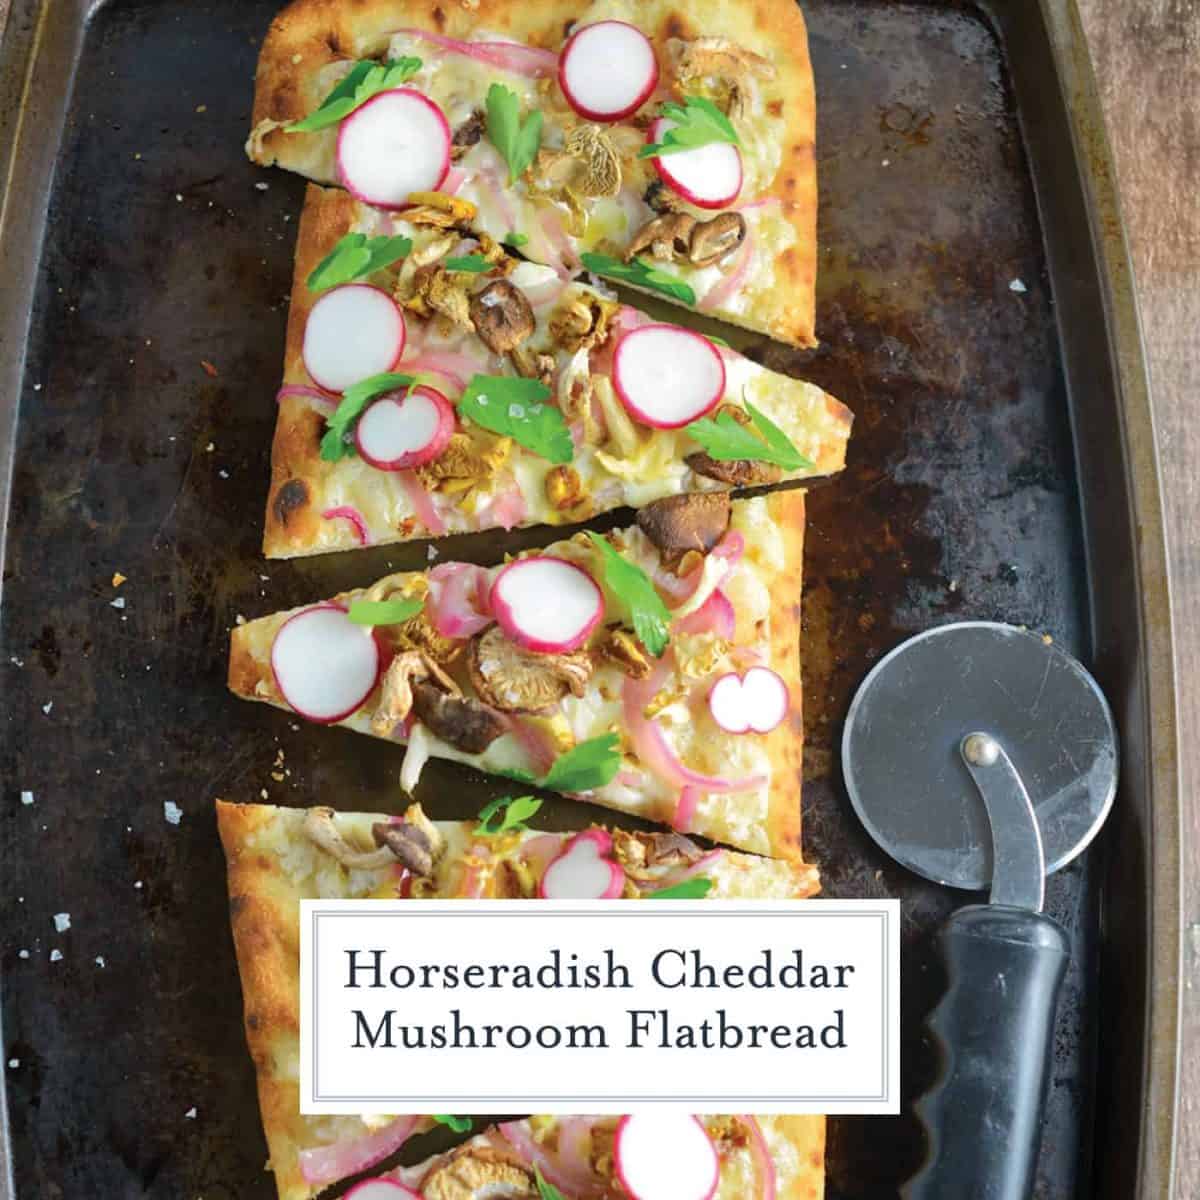 Horseradish Cheddar Mushroom Flatbread combines a mushroom blend, fresh radishes, pickled red onion, tangy horseradish cheddar cheese, Italian parsley and Maldon sea salt. Delicious! #vegetarianappetizers #flatbreadrecipes www.savoryexperiments.com